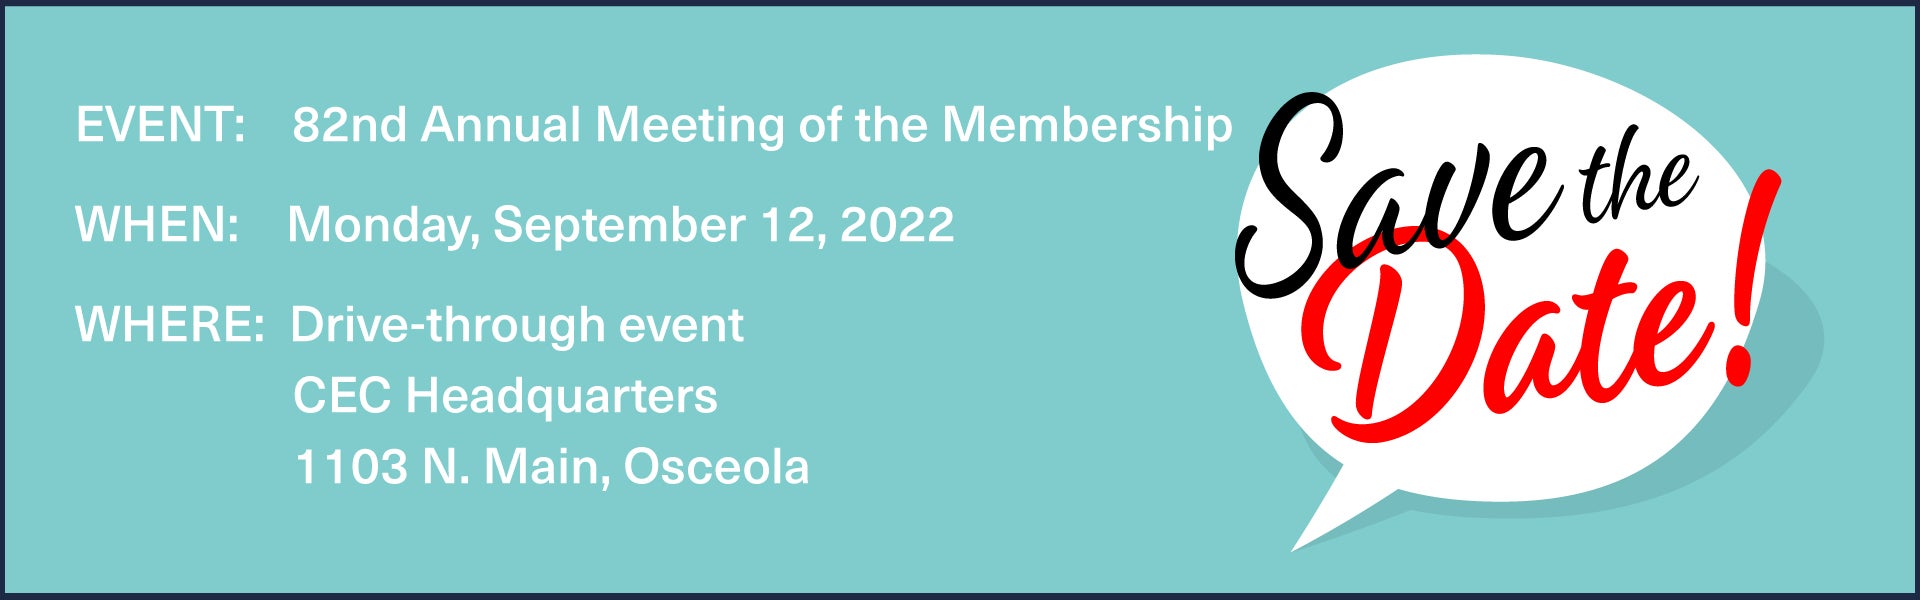 2022 Annual Meeting 